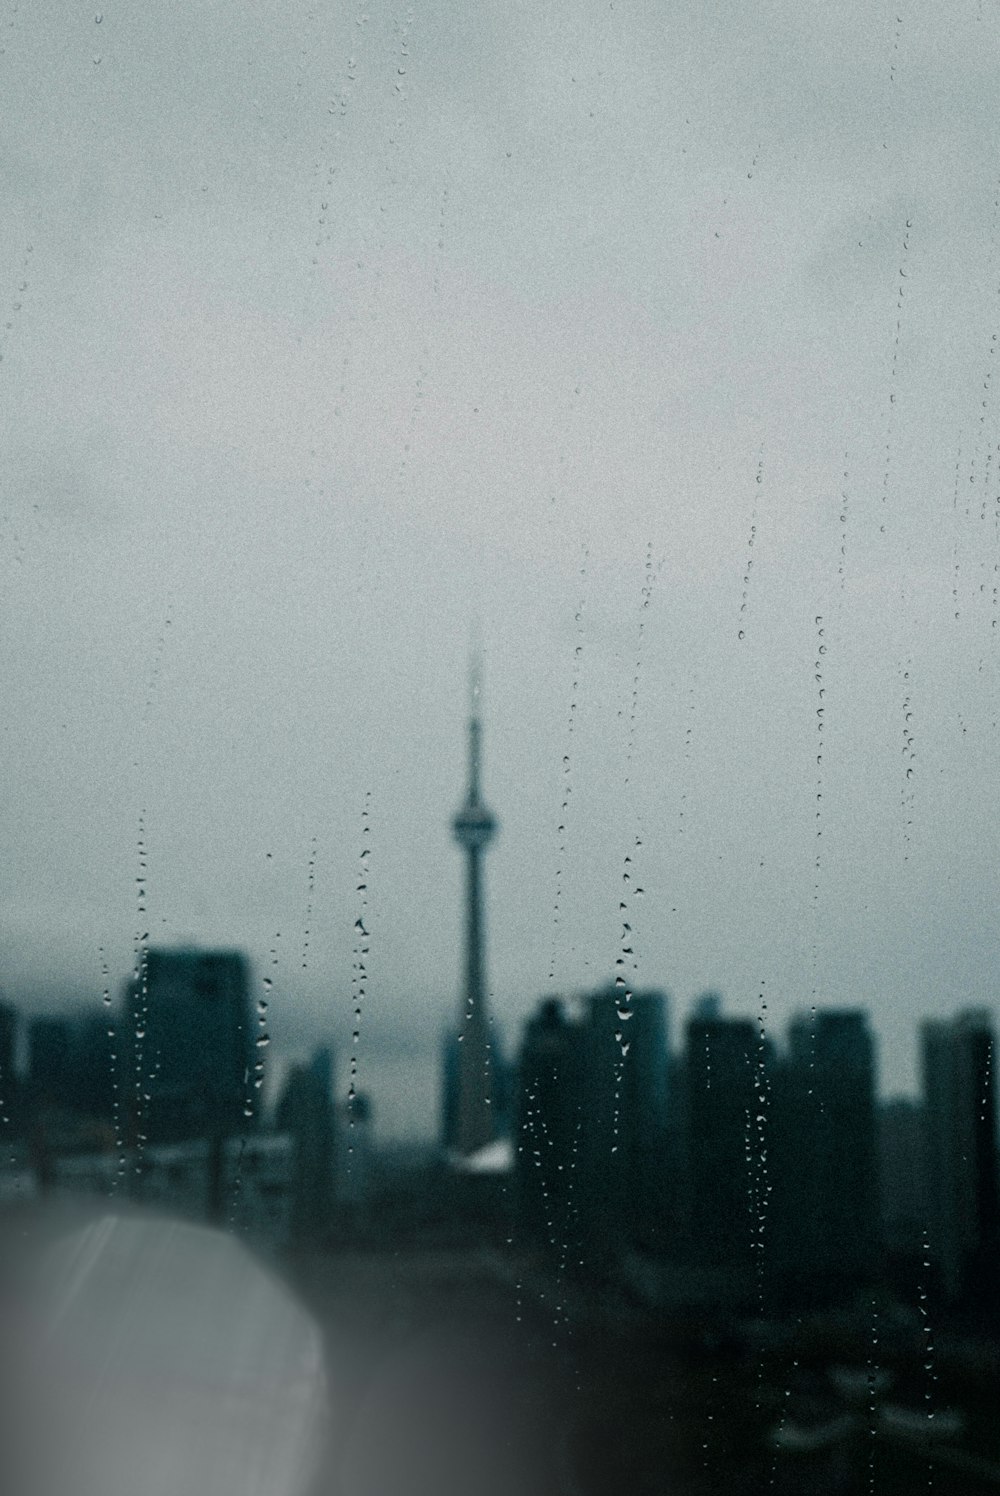 a view of a city through a rainy window